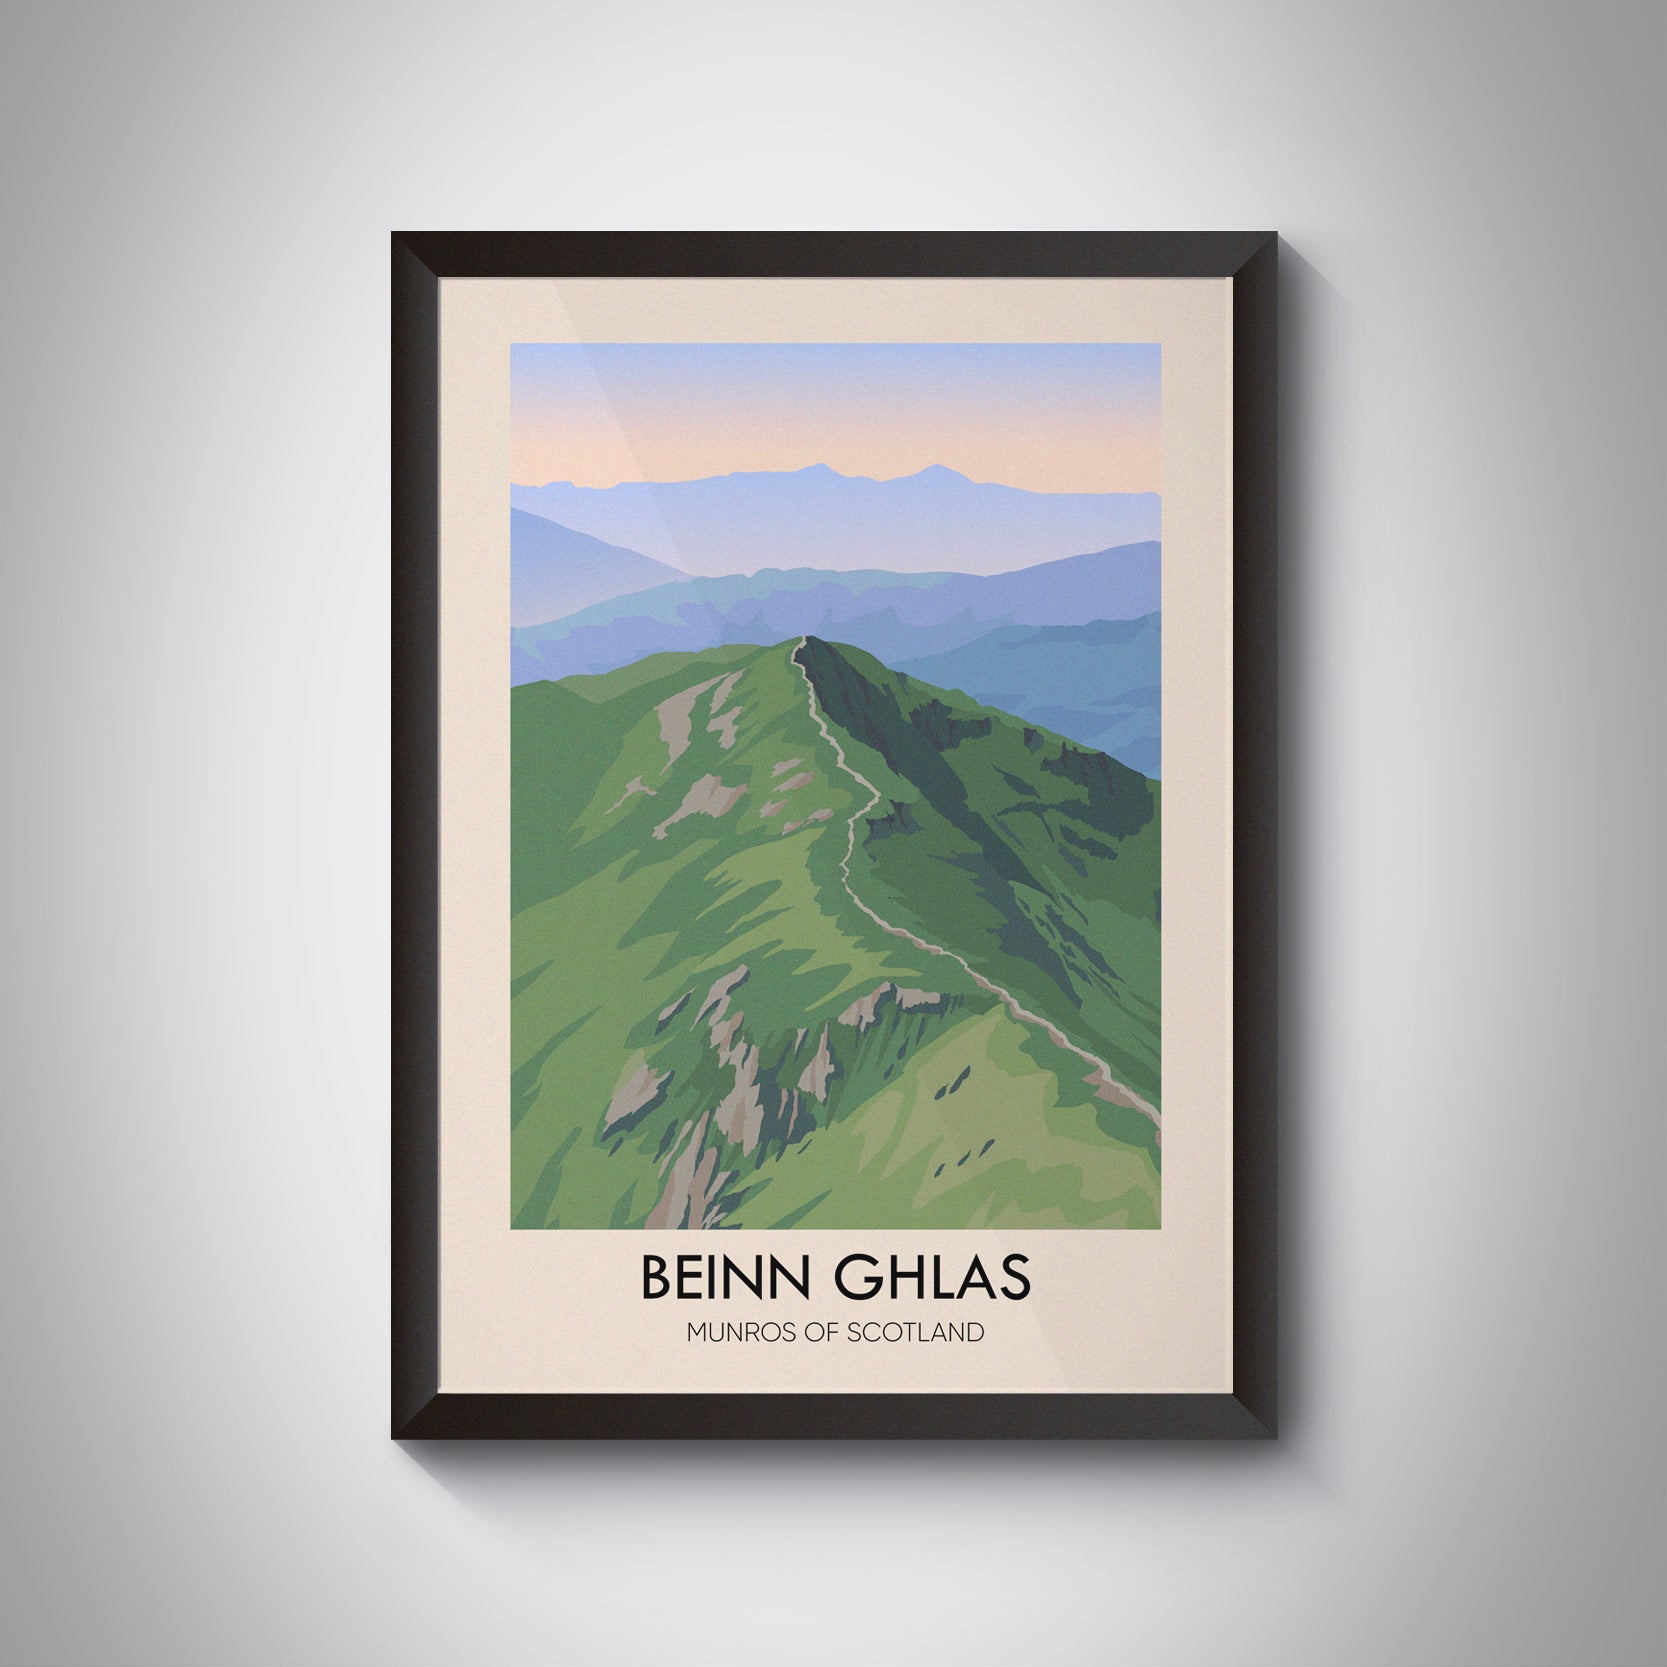 Beinn Ghlas Munros Of Scotland Travel Poster